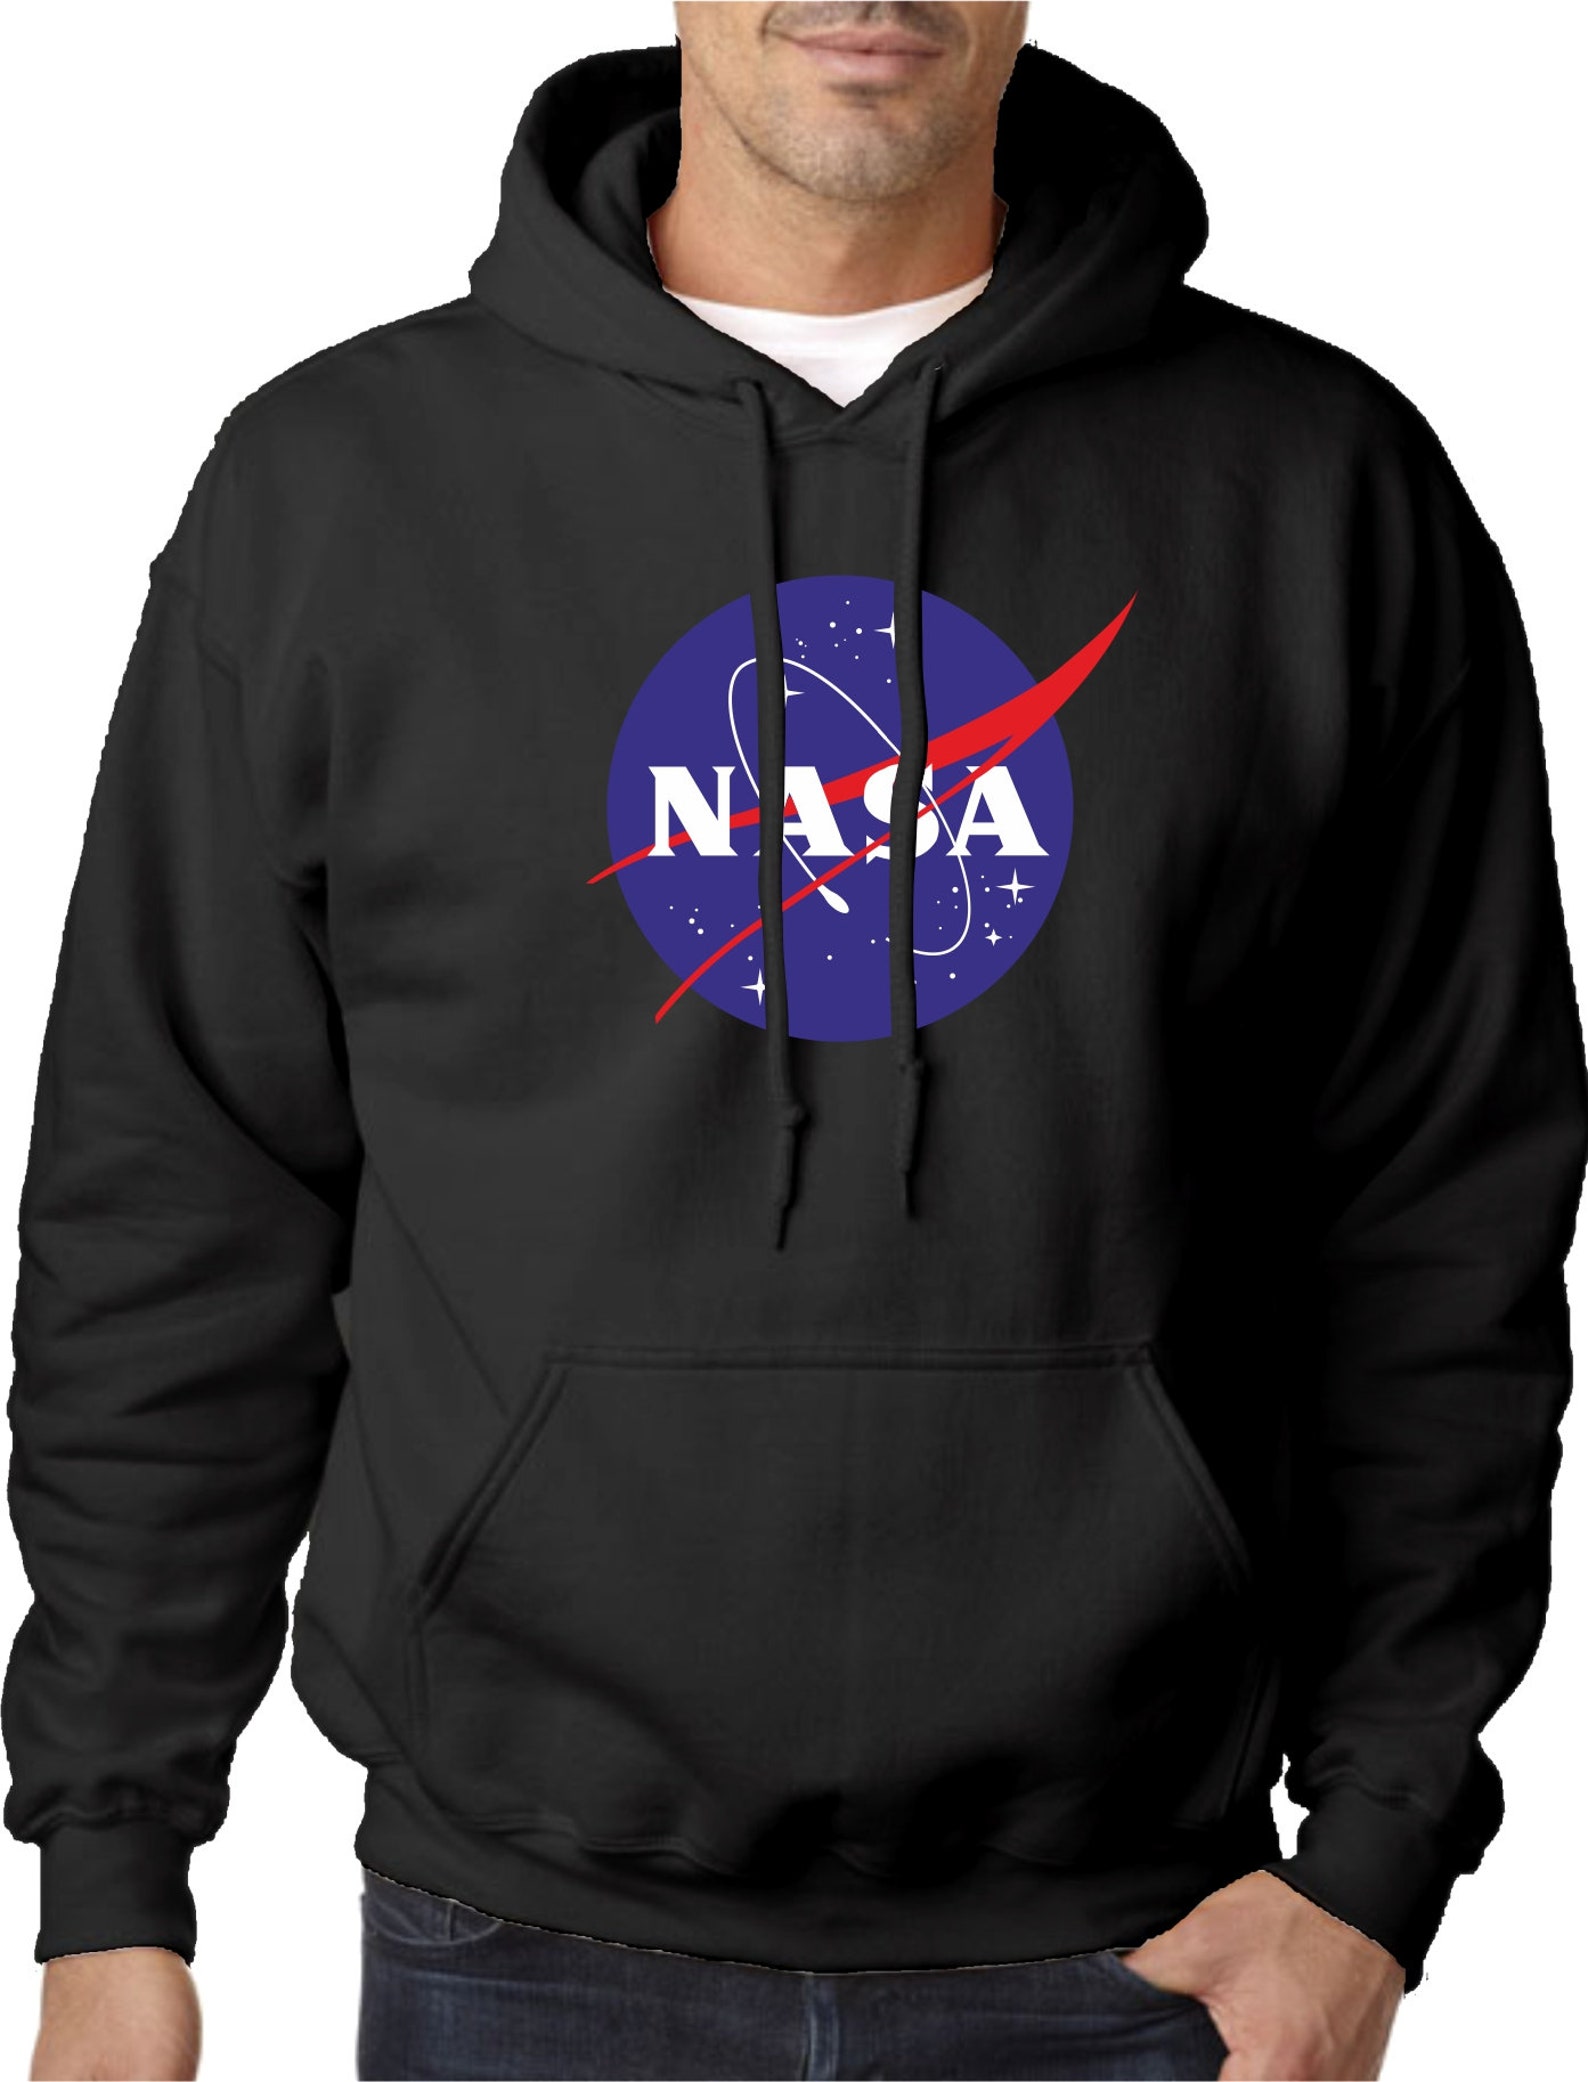 Nasa Hoodie SpaceX Hoody Tesla Falcon Space Agency Joint Space | Etsy